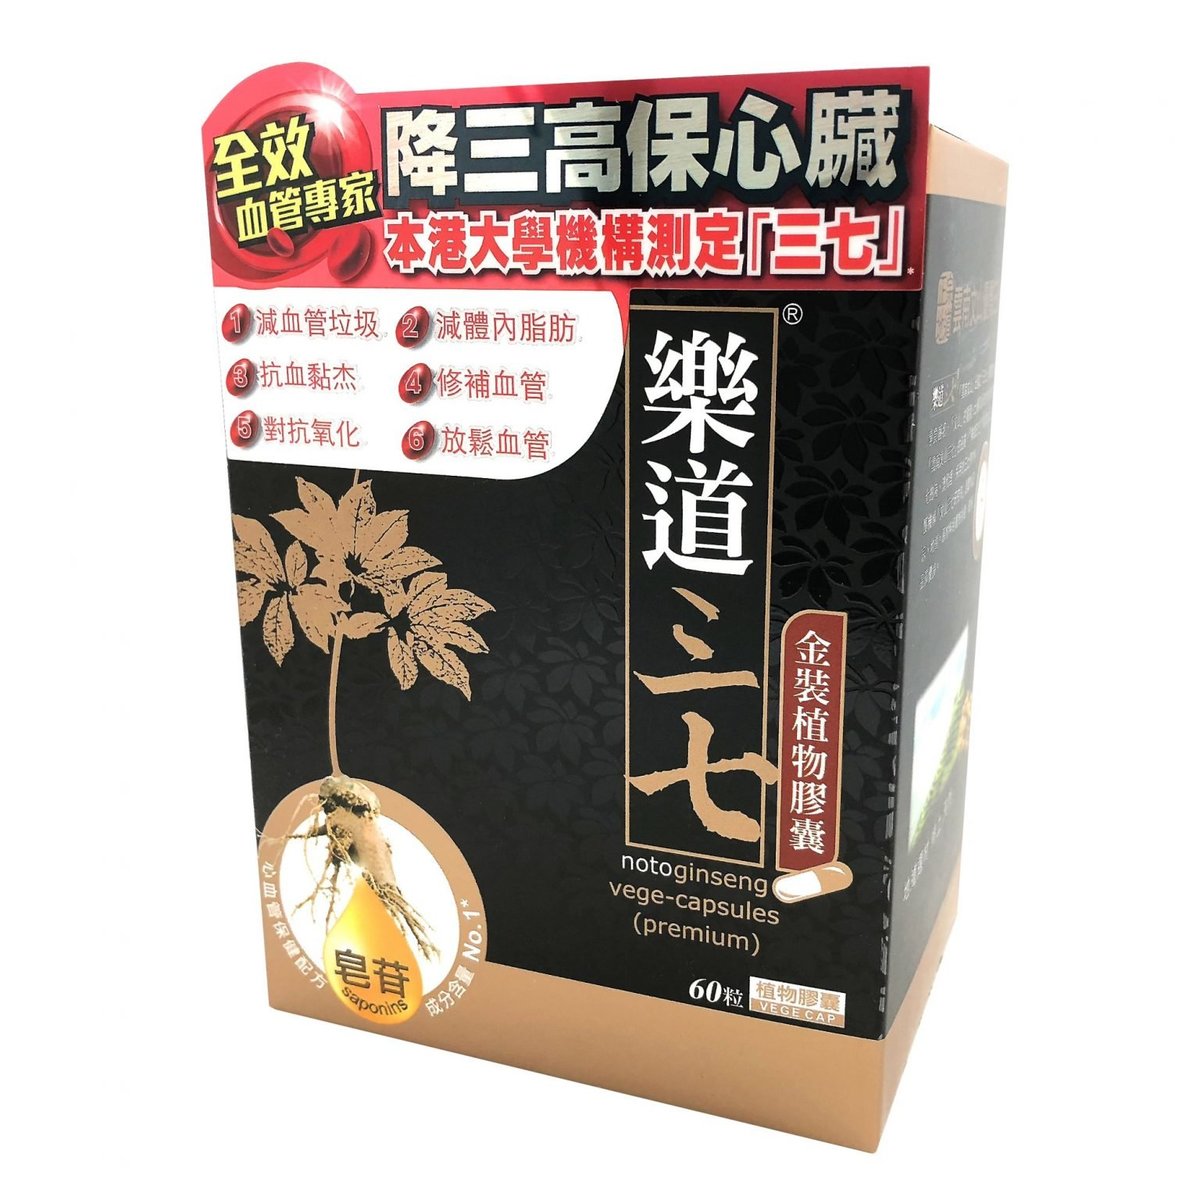 Ledao - Ledao Sanqi Golden Vegetable Capsules (60 Capsules)